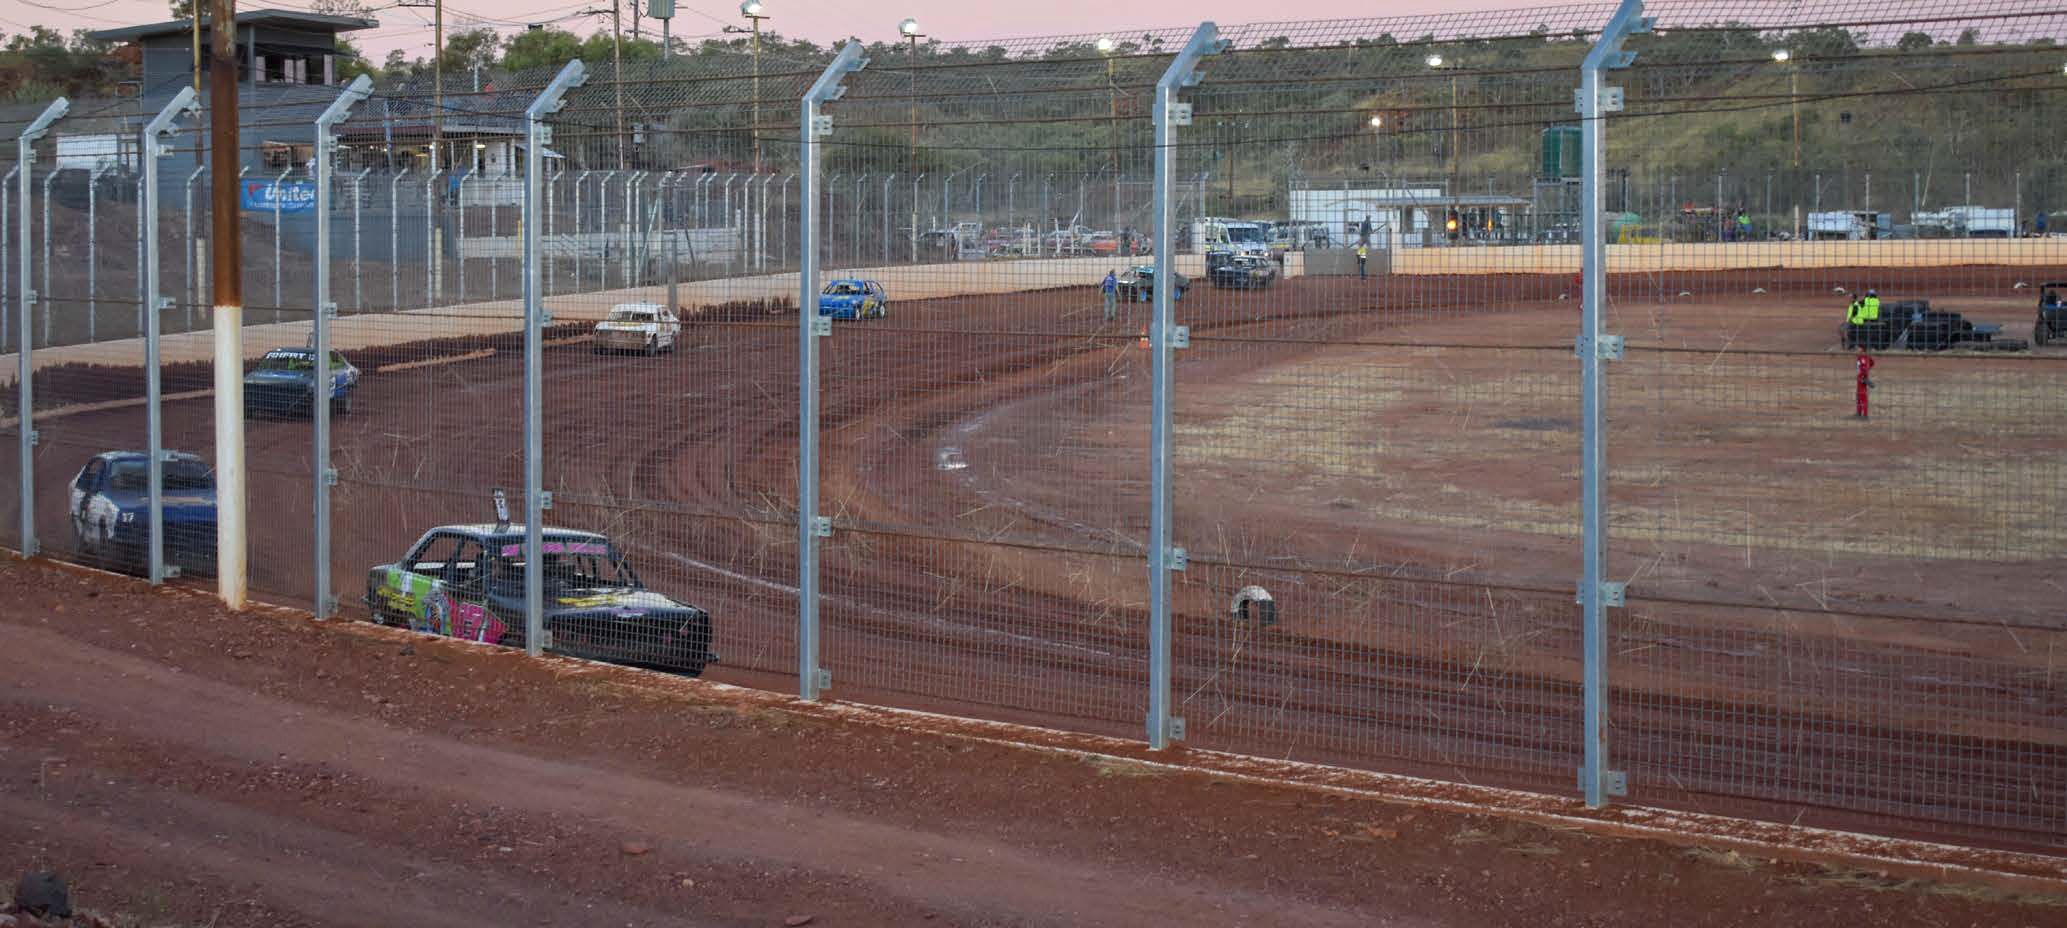 Northern Territory Titles at Tennant Creek Speedway